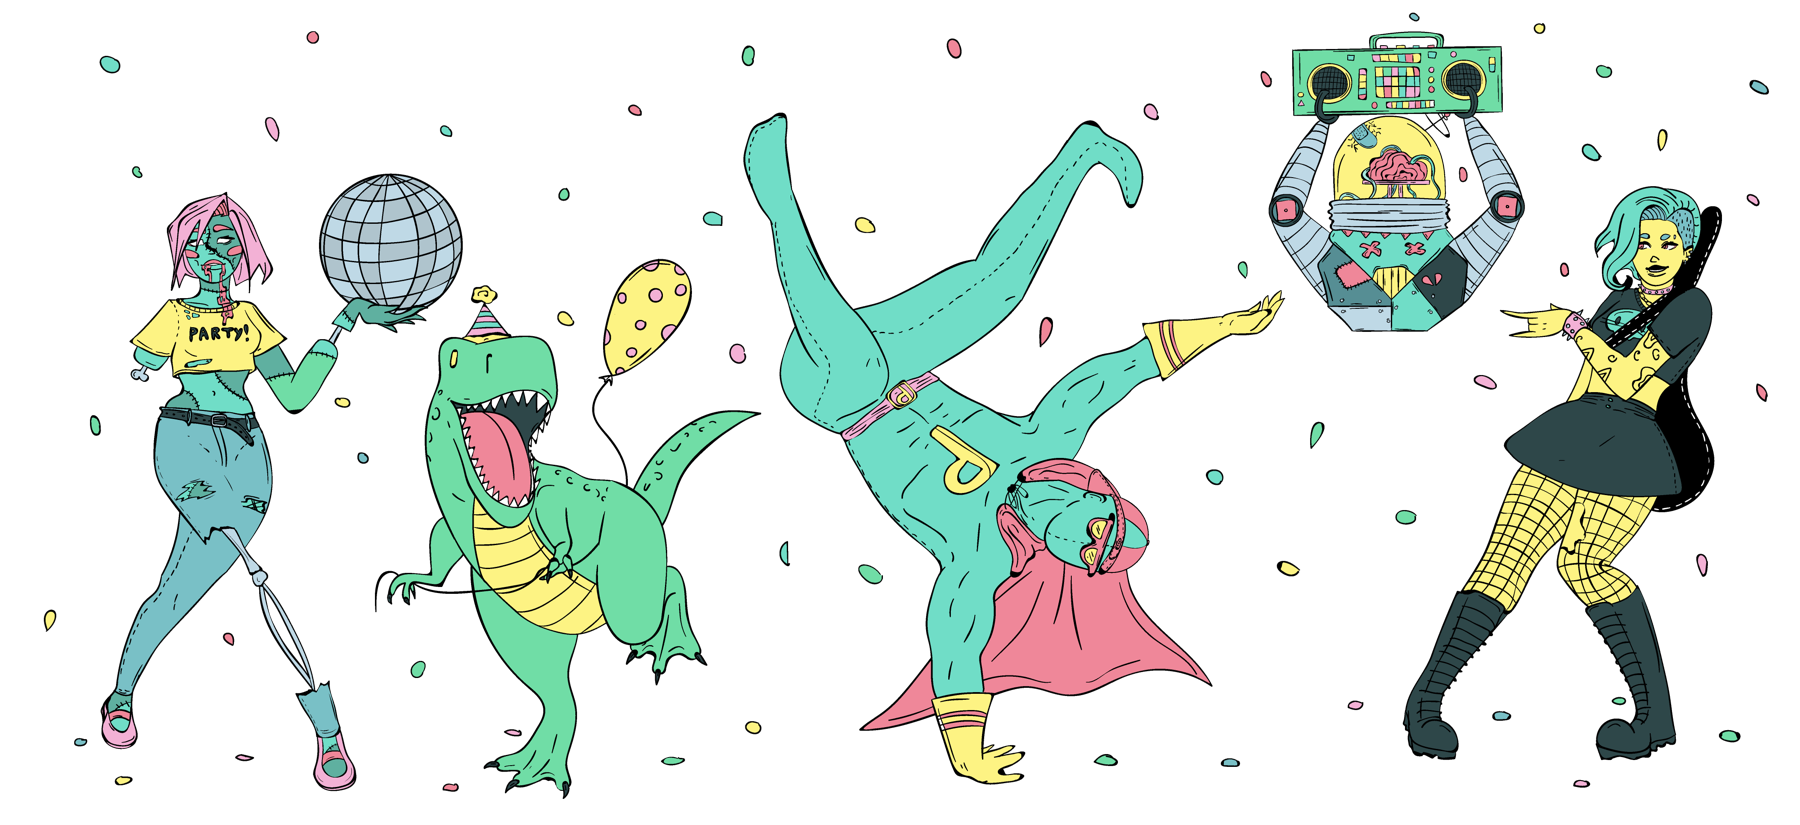 Zombie, dinosaur, robot, rockstar, and superhero all dancing